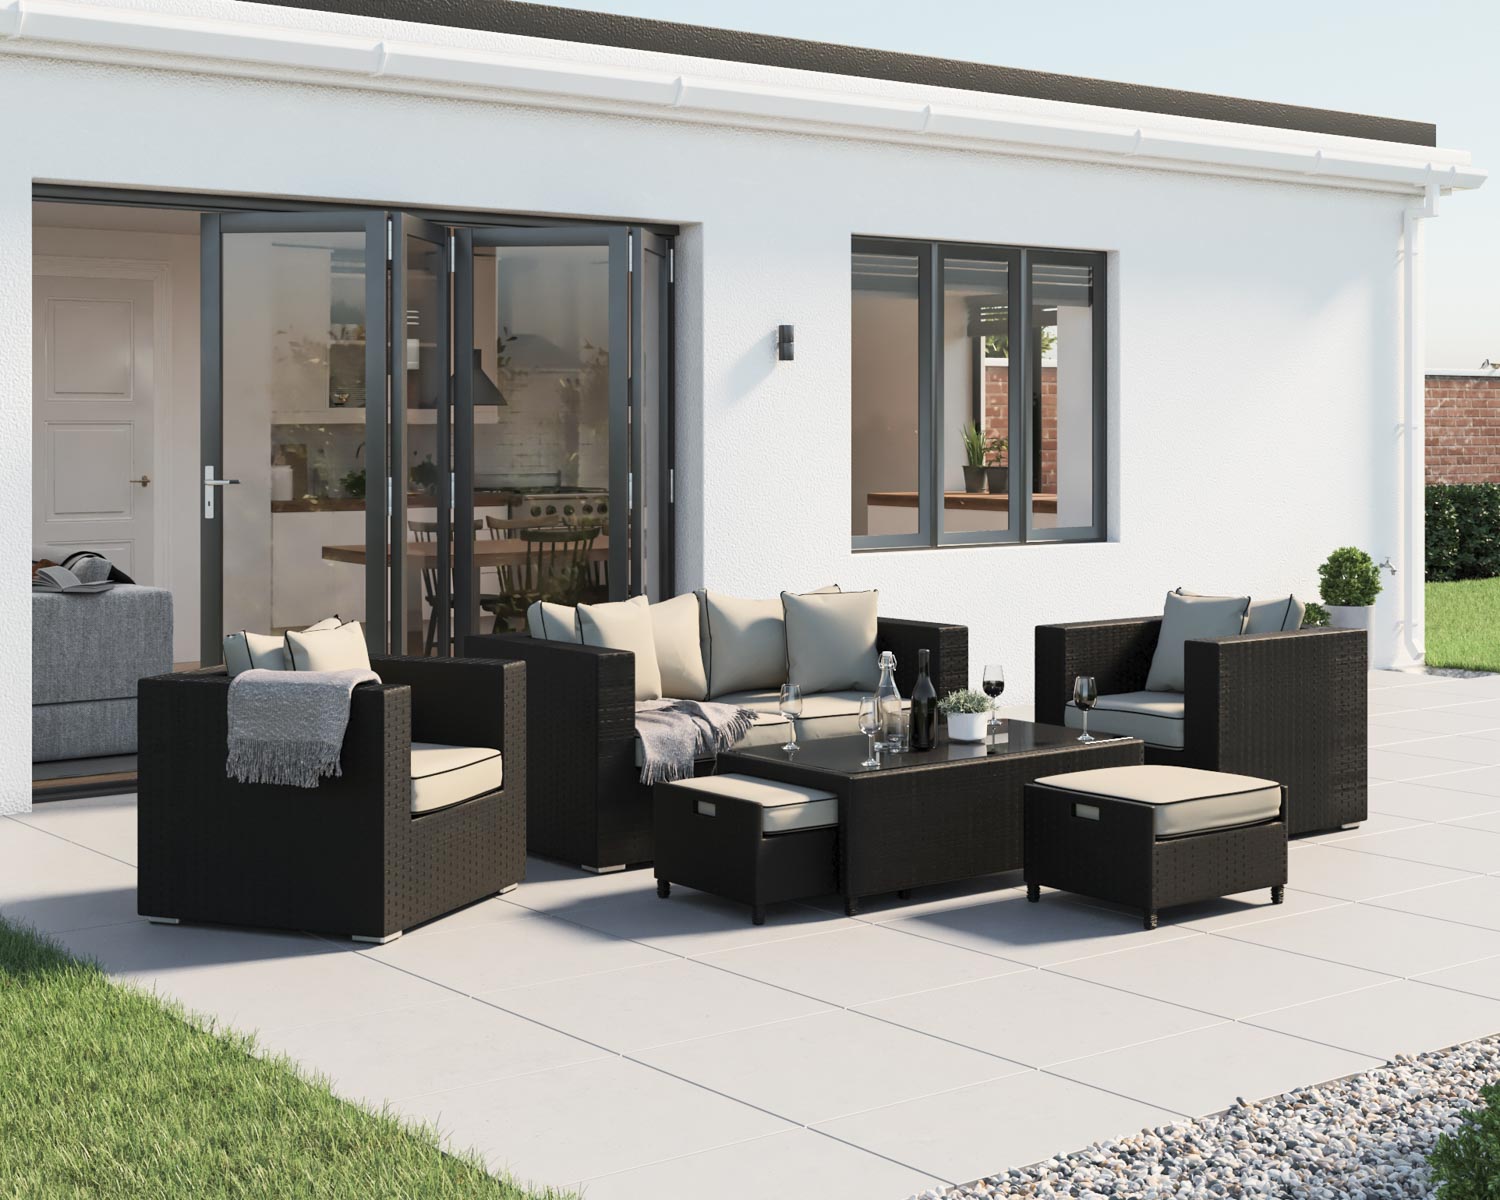 2 Seater Rattan Garden Sofa & Armchair Set in Black & White - Ascot - Rattan Direct